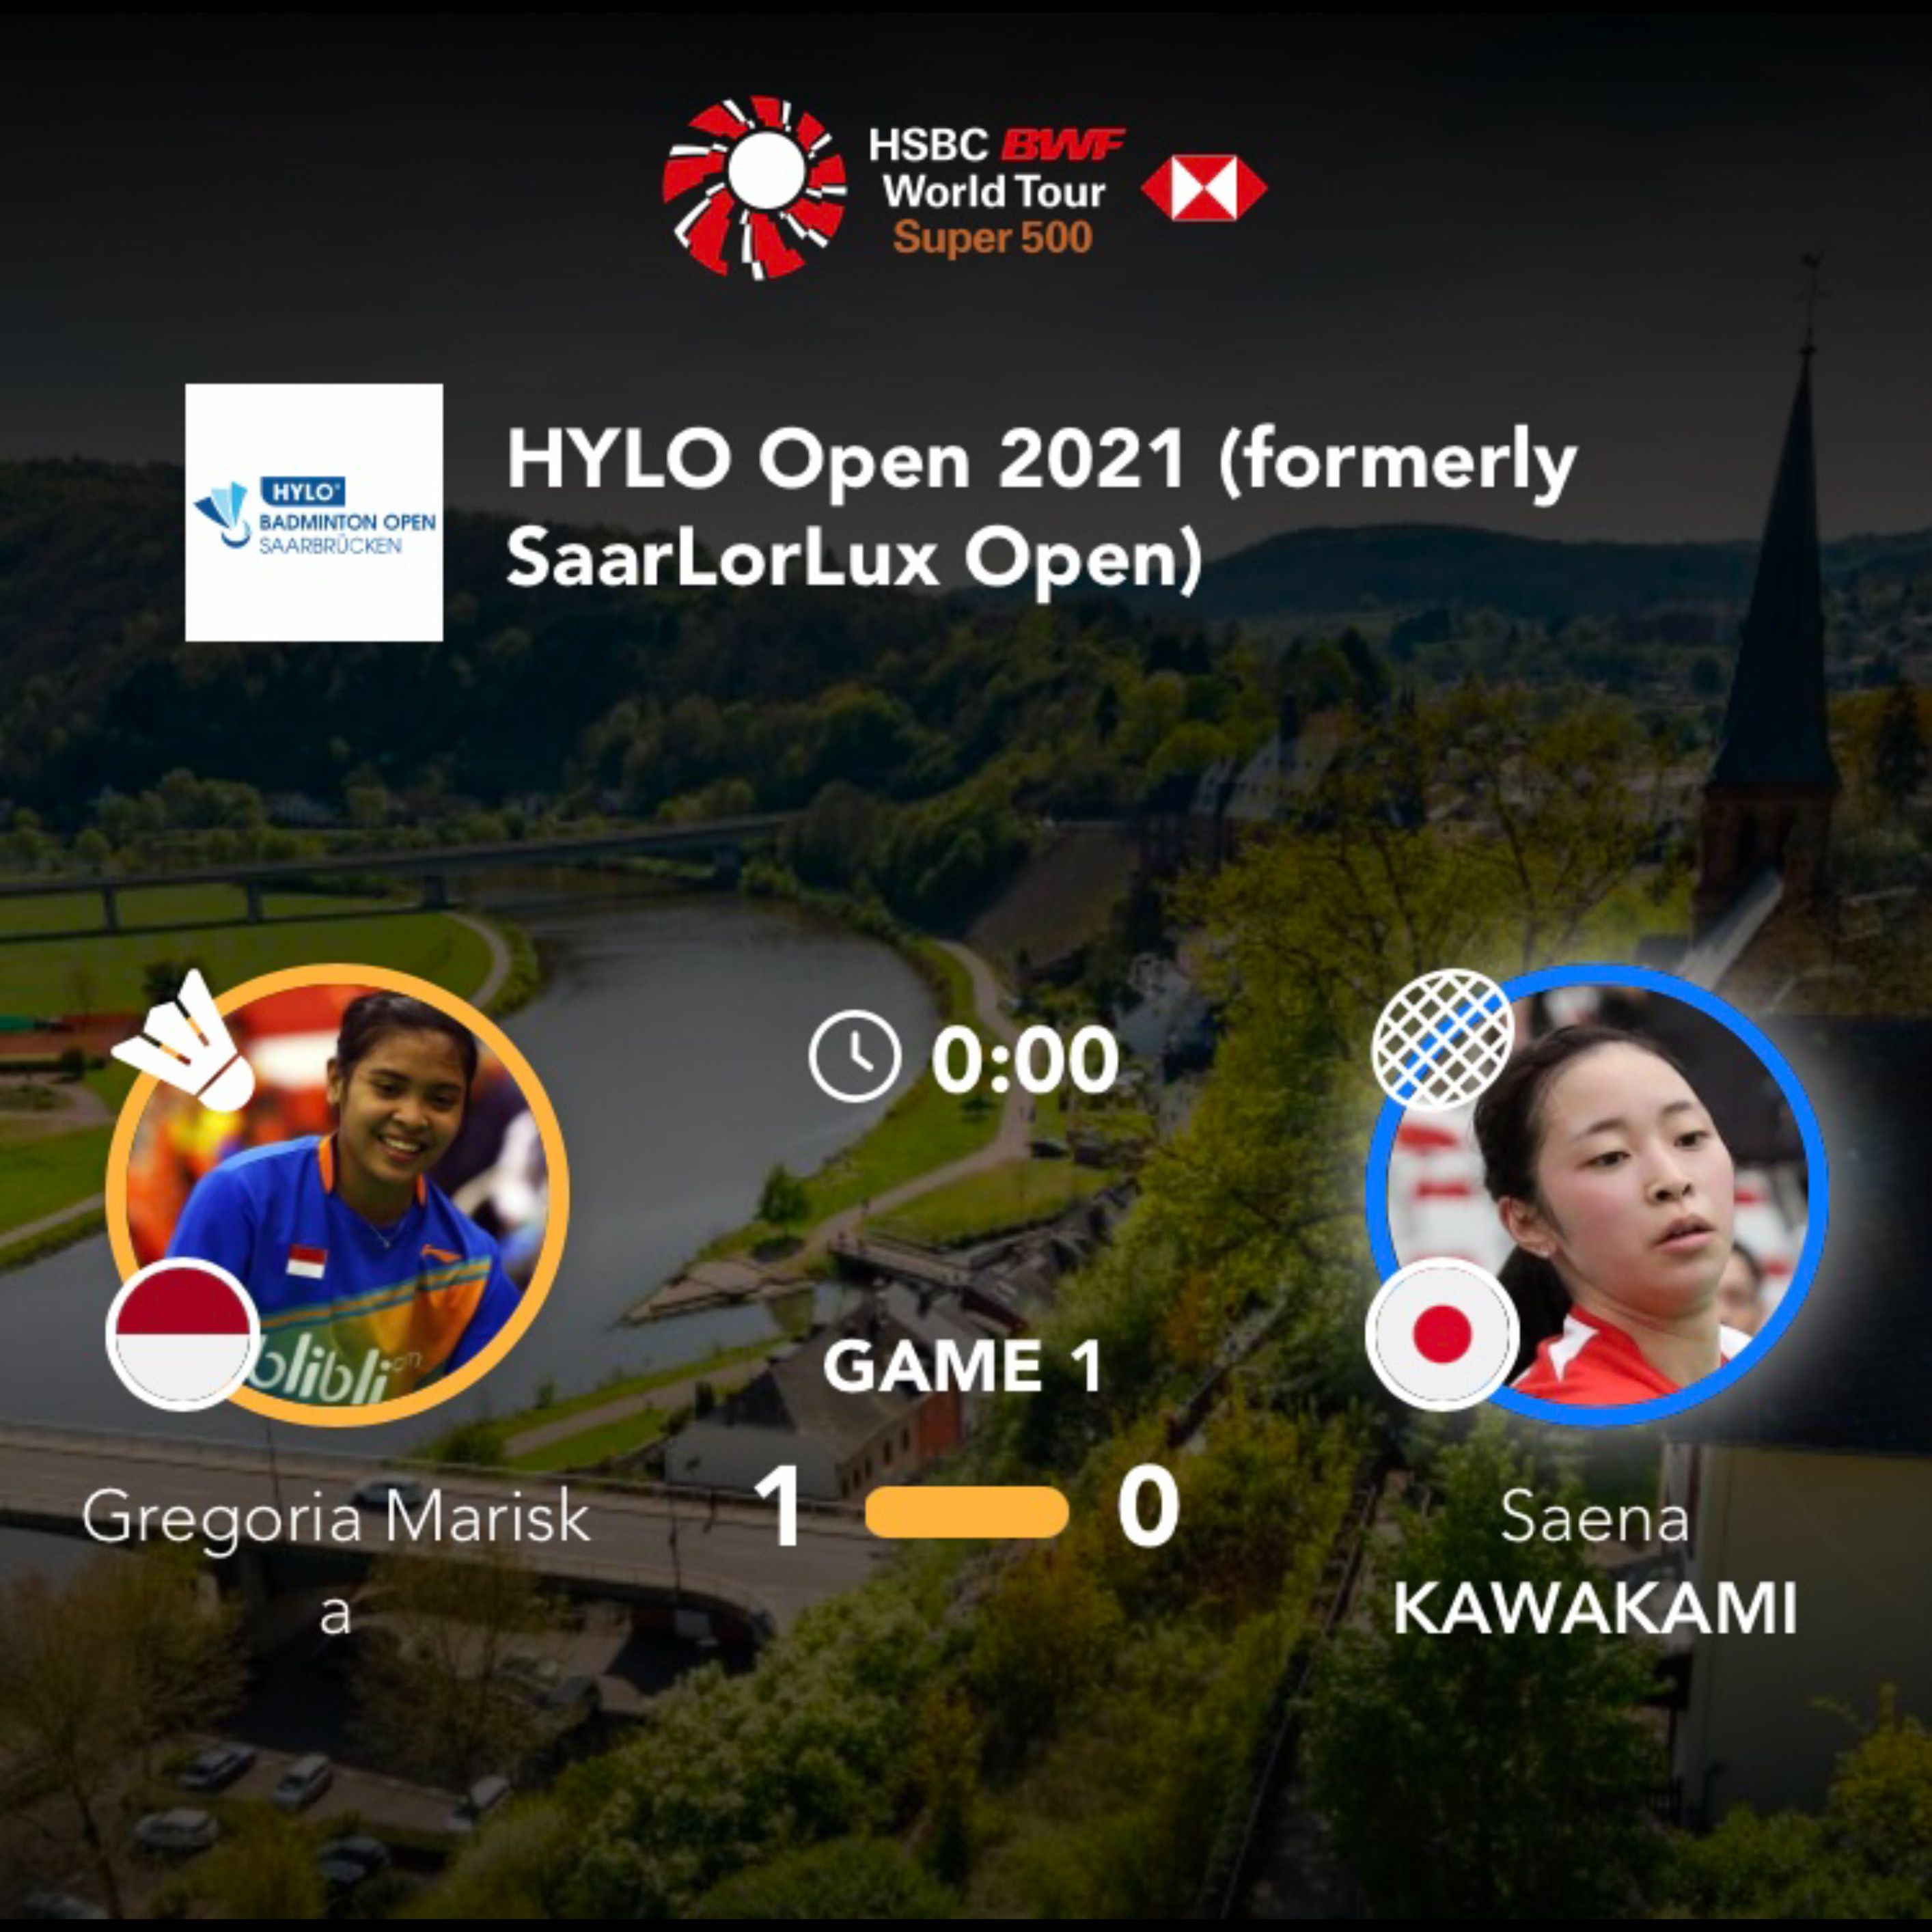 SEDANG BERLANGSUNG, Adu Skill Gregoria Mariska Tunjung vs Saena Kawakami Hylo Open 2021, Cek Link Live Score